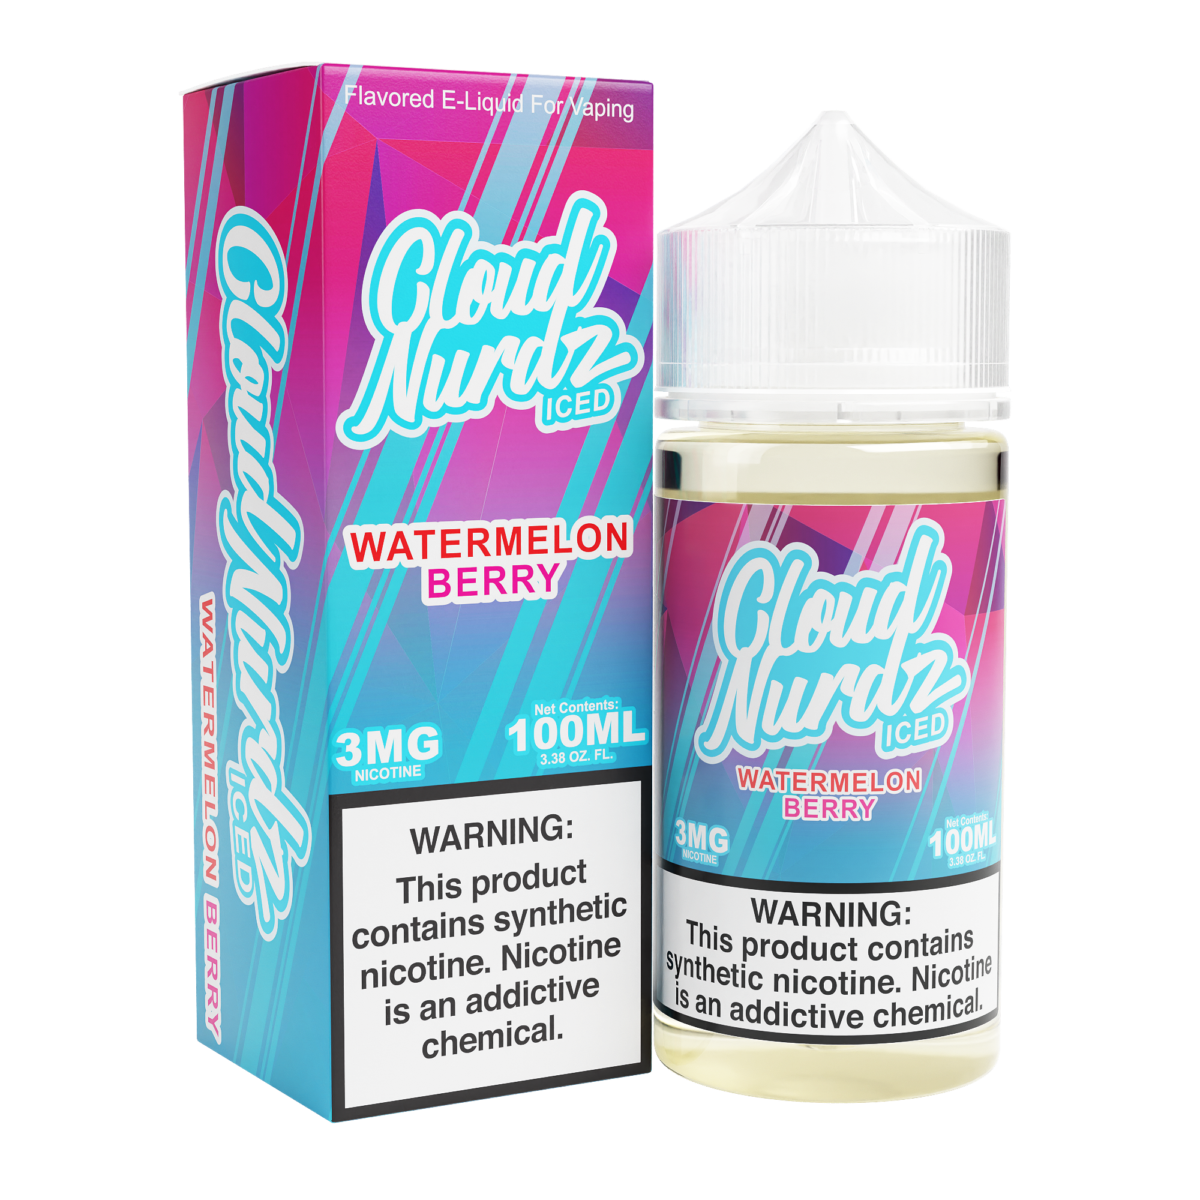 Cloud Nurdz Series E-Liquid 100mL Watermelon Berry ice with packaging